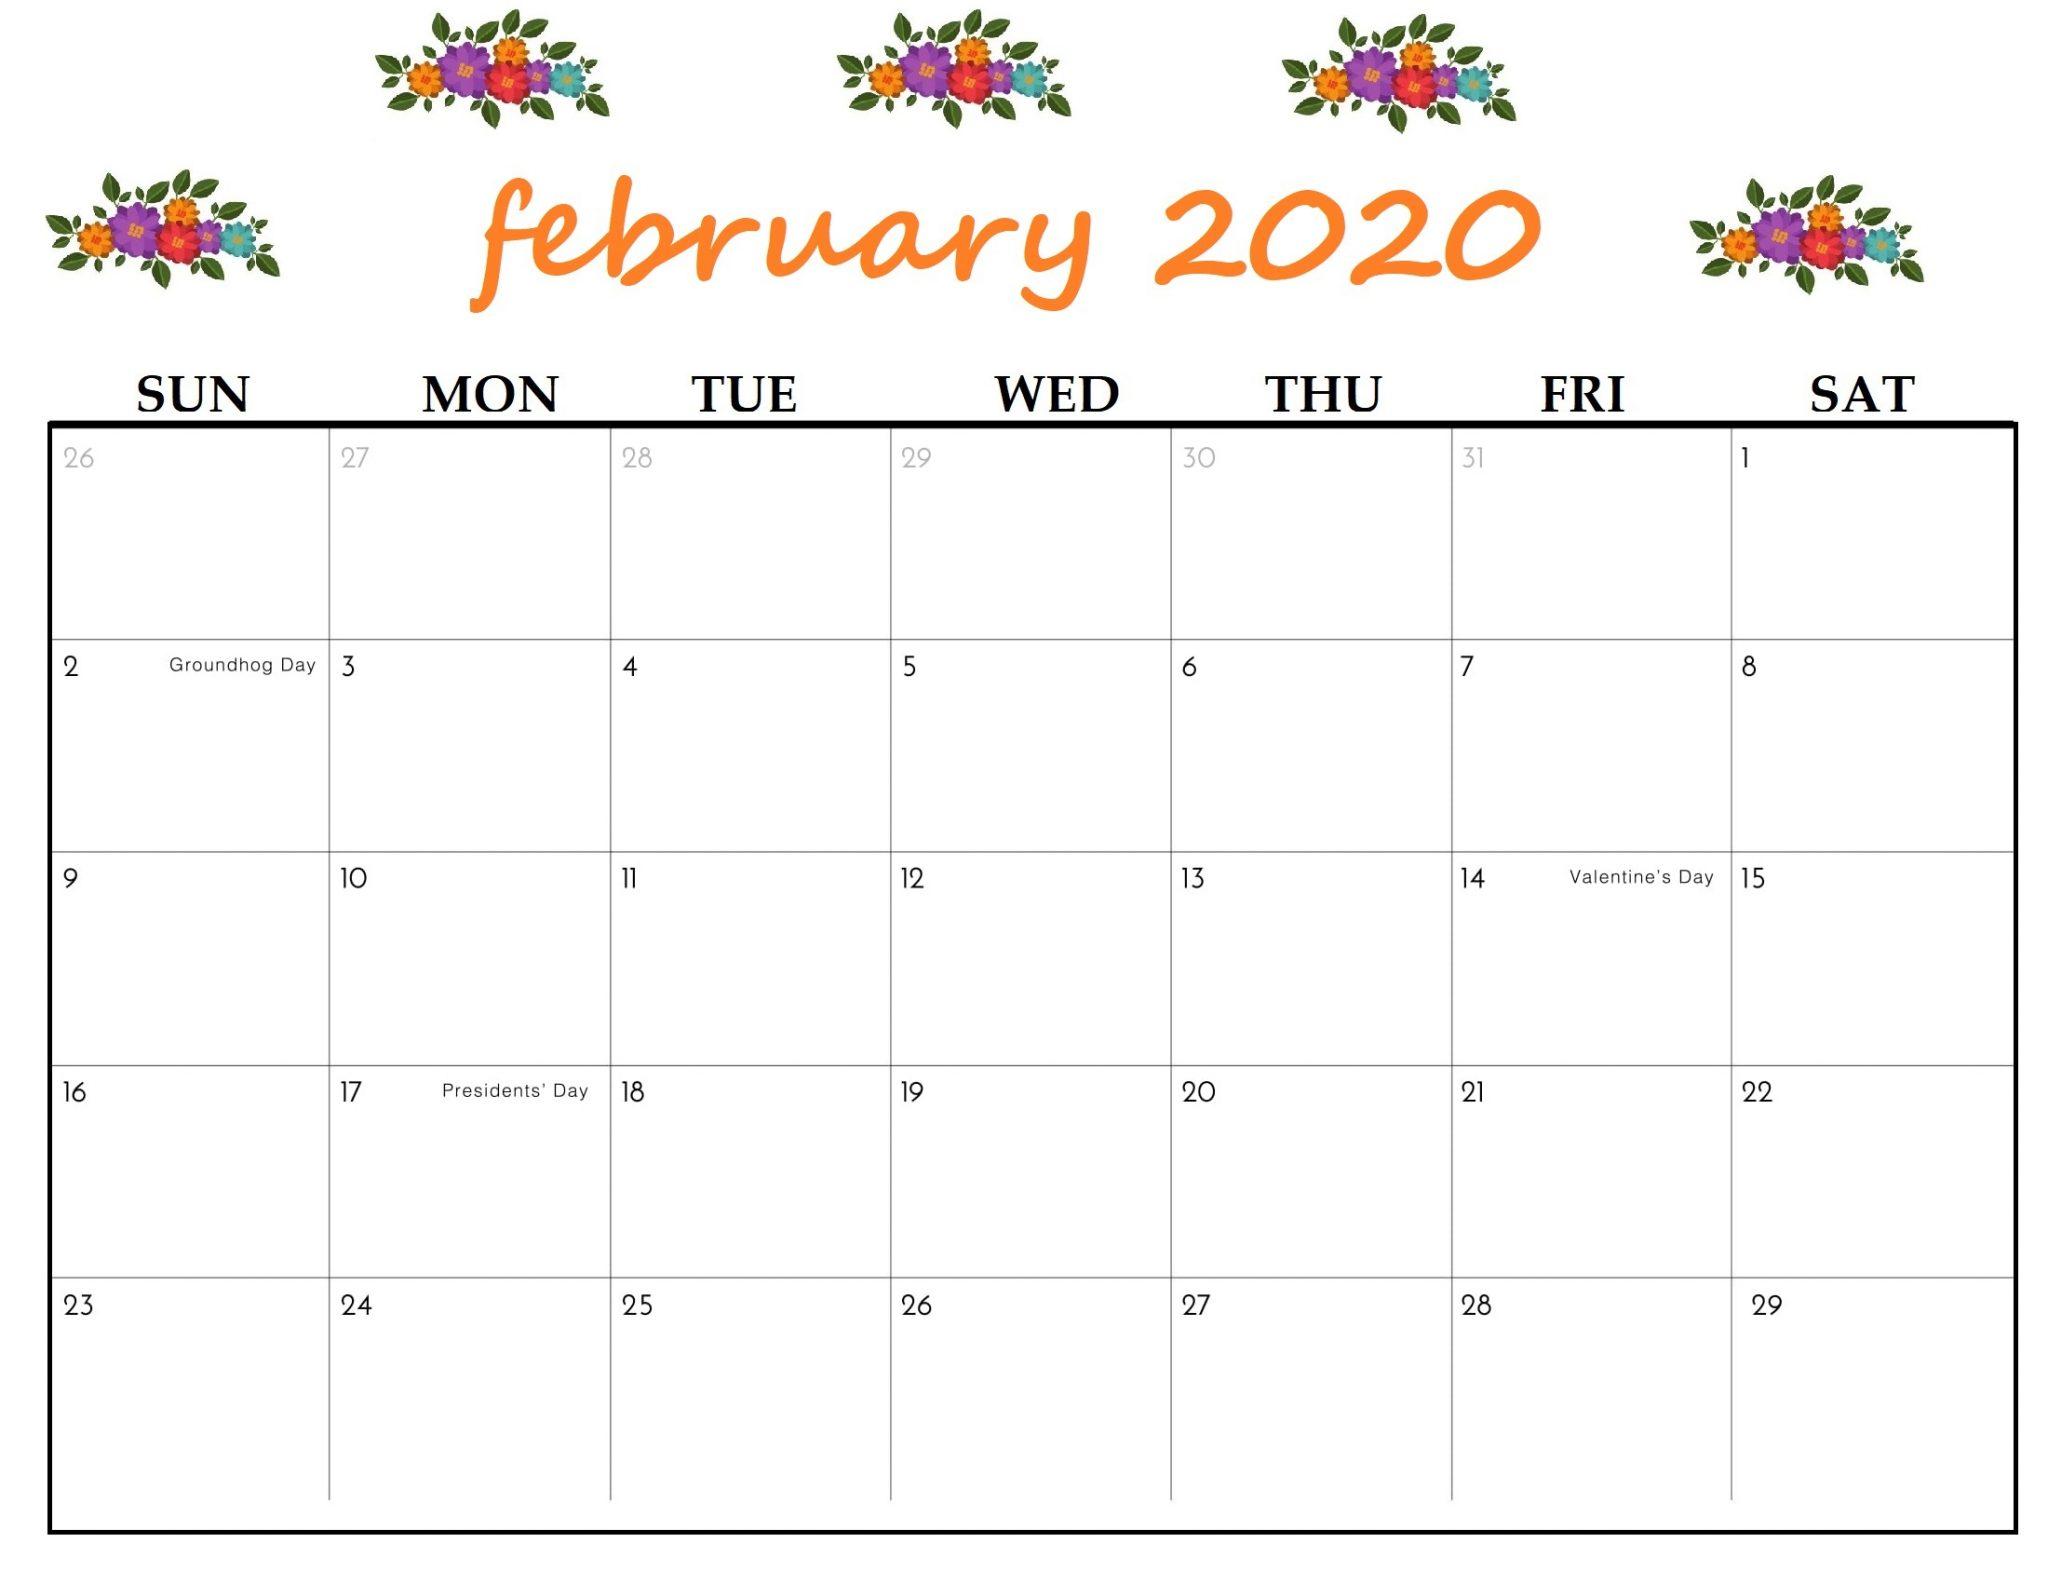 Floral February 2020 Calendar Wallpaper For Desktop, iPhone, Laptop